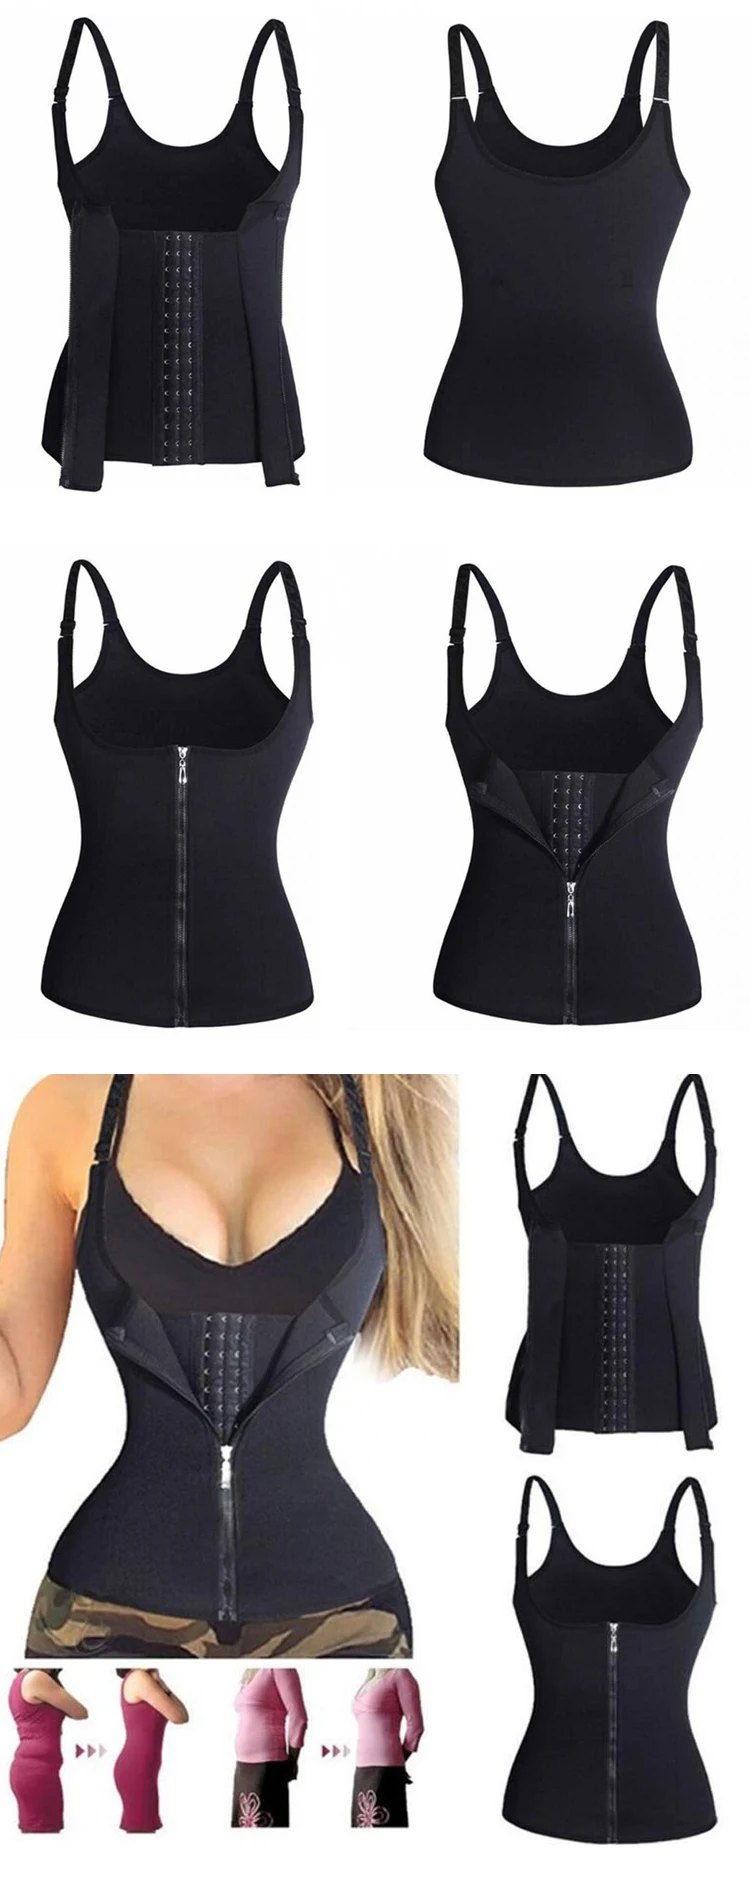 Enerup Women High Waist Support Brace Trainer Corset Zipper Vest Body Underwear Shaper Cincher Tank Top with Adjustable Straps